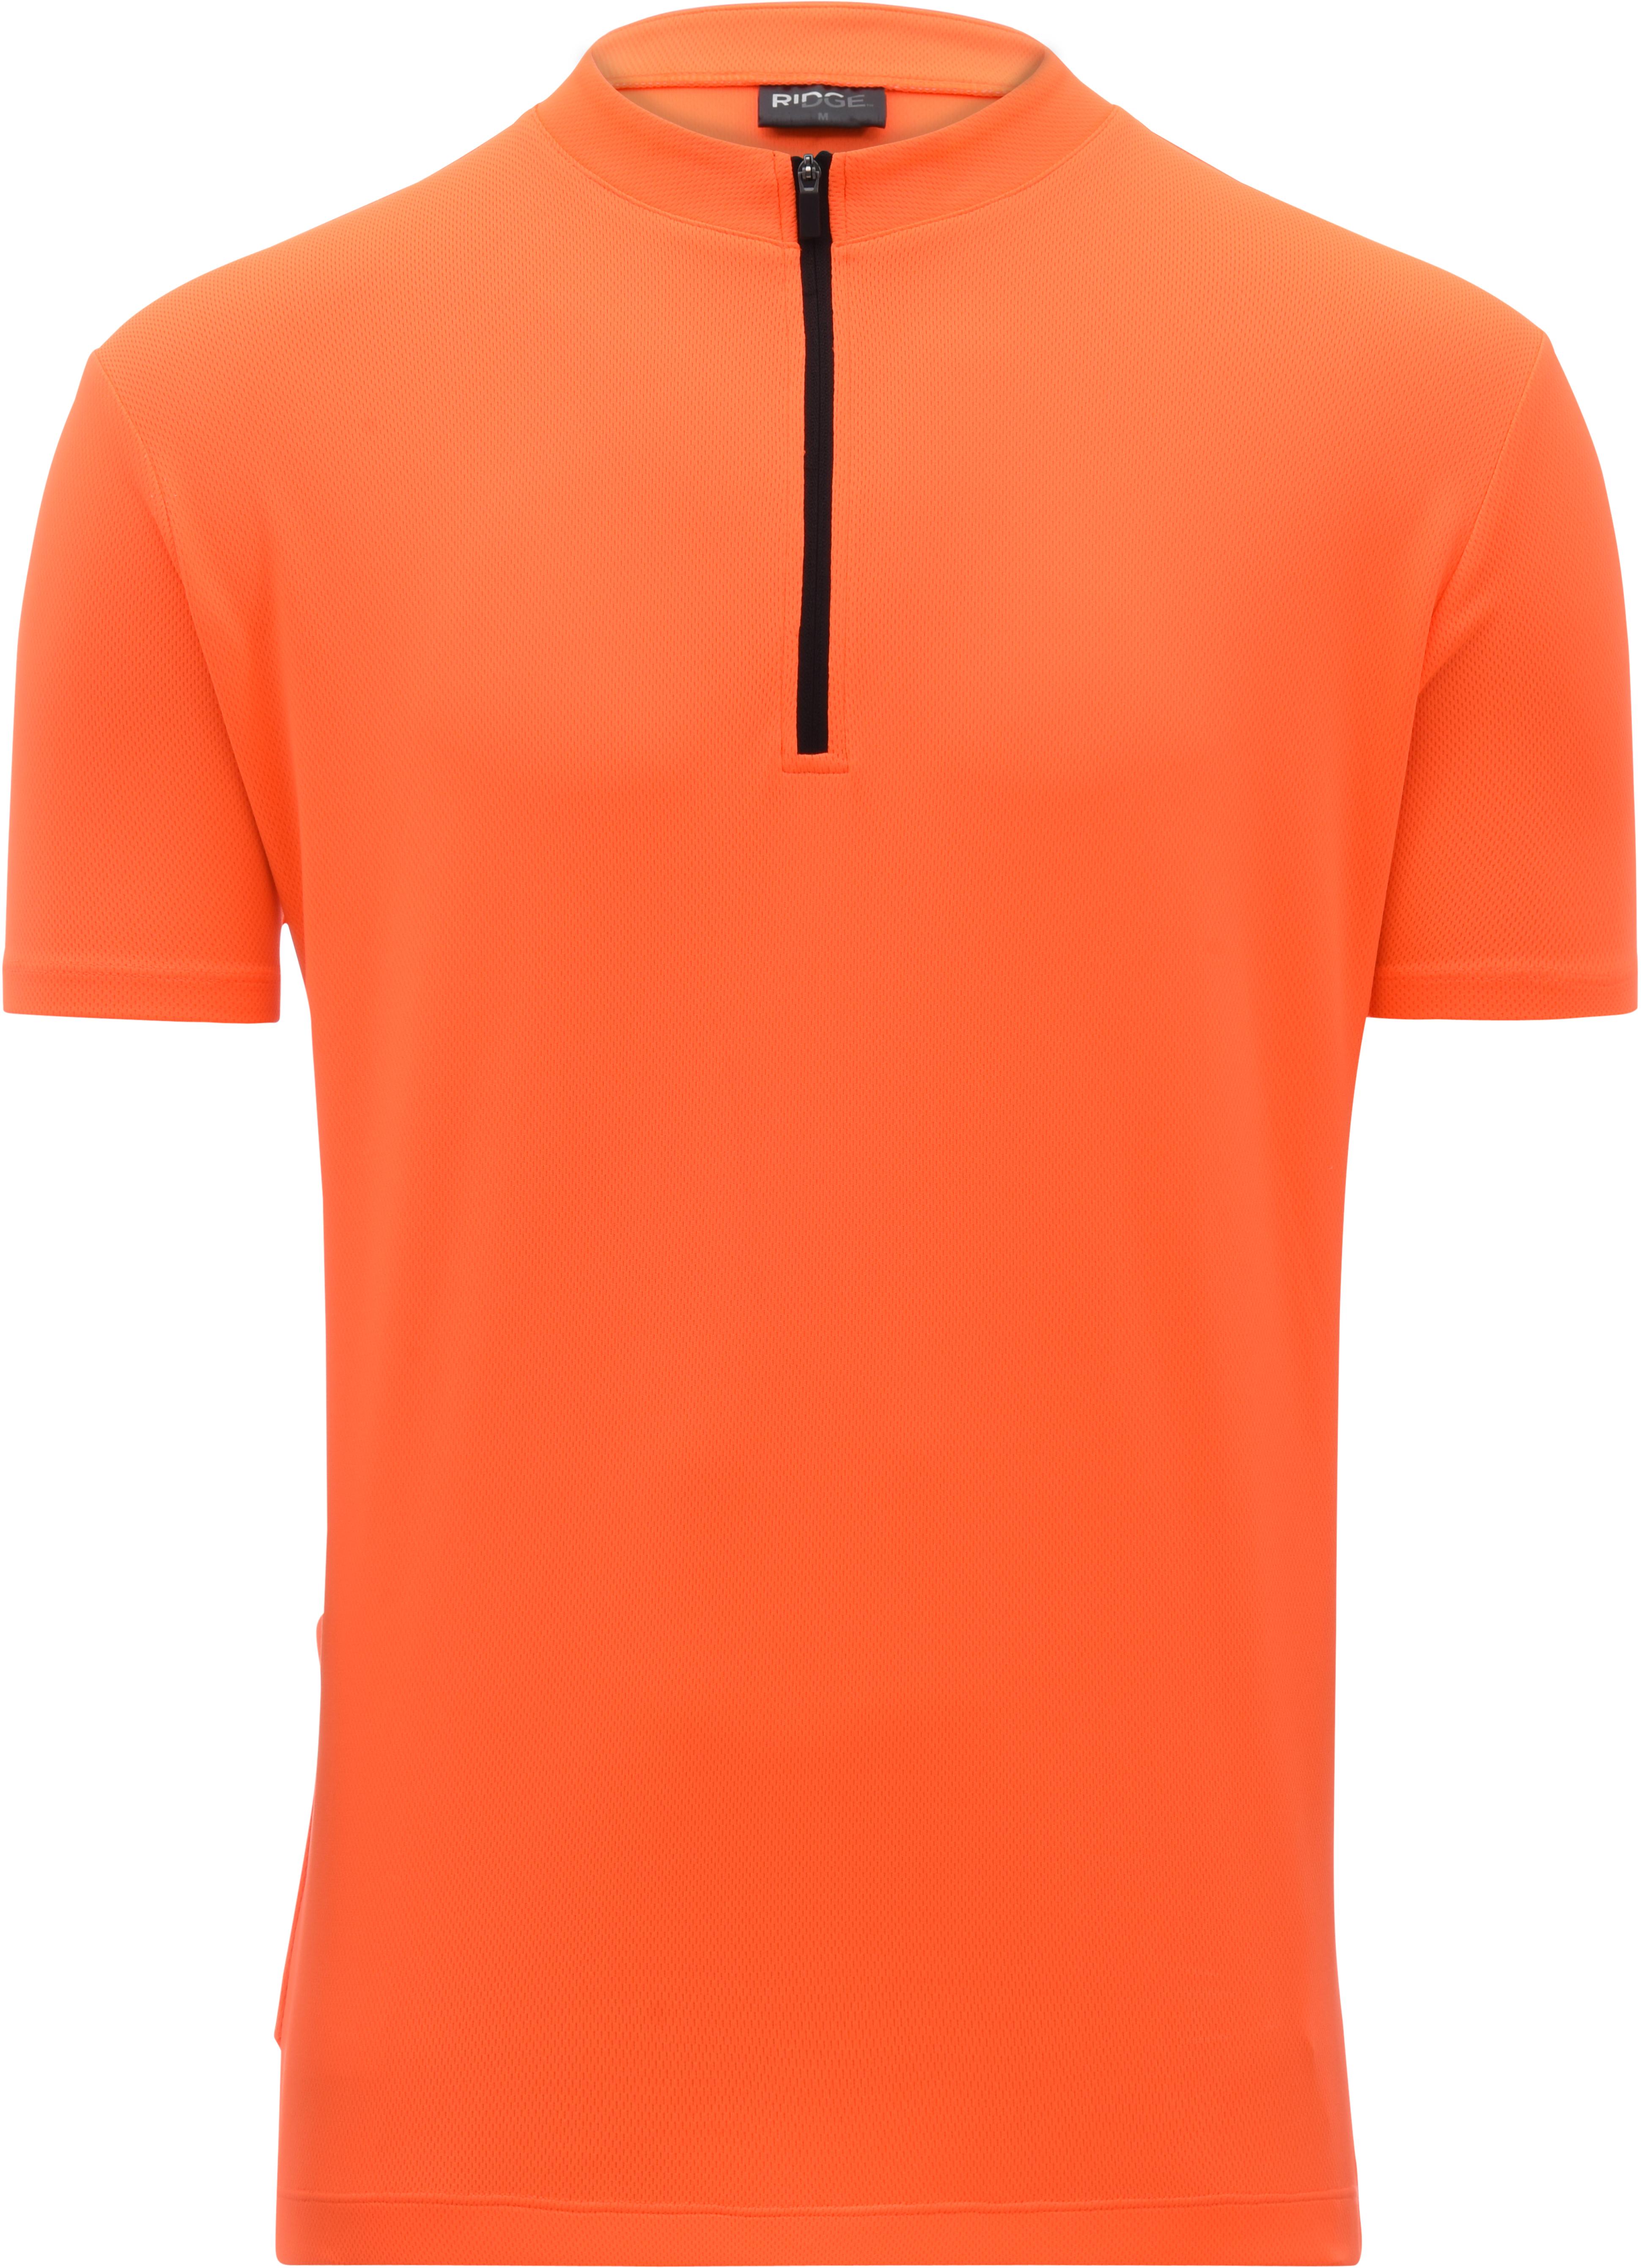 Ridge Mens Cycling Jersey - Orange Medium for only £10.00